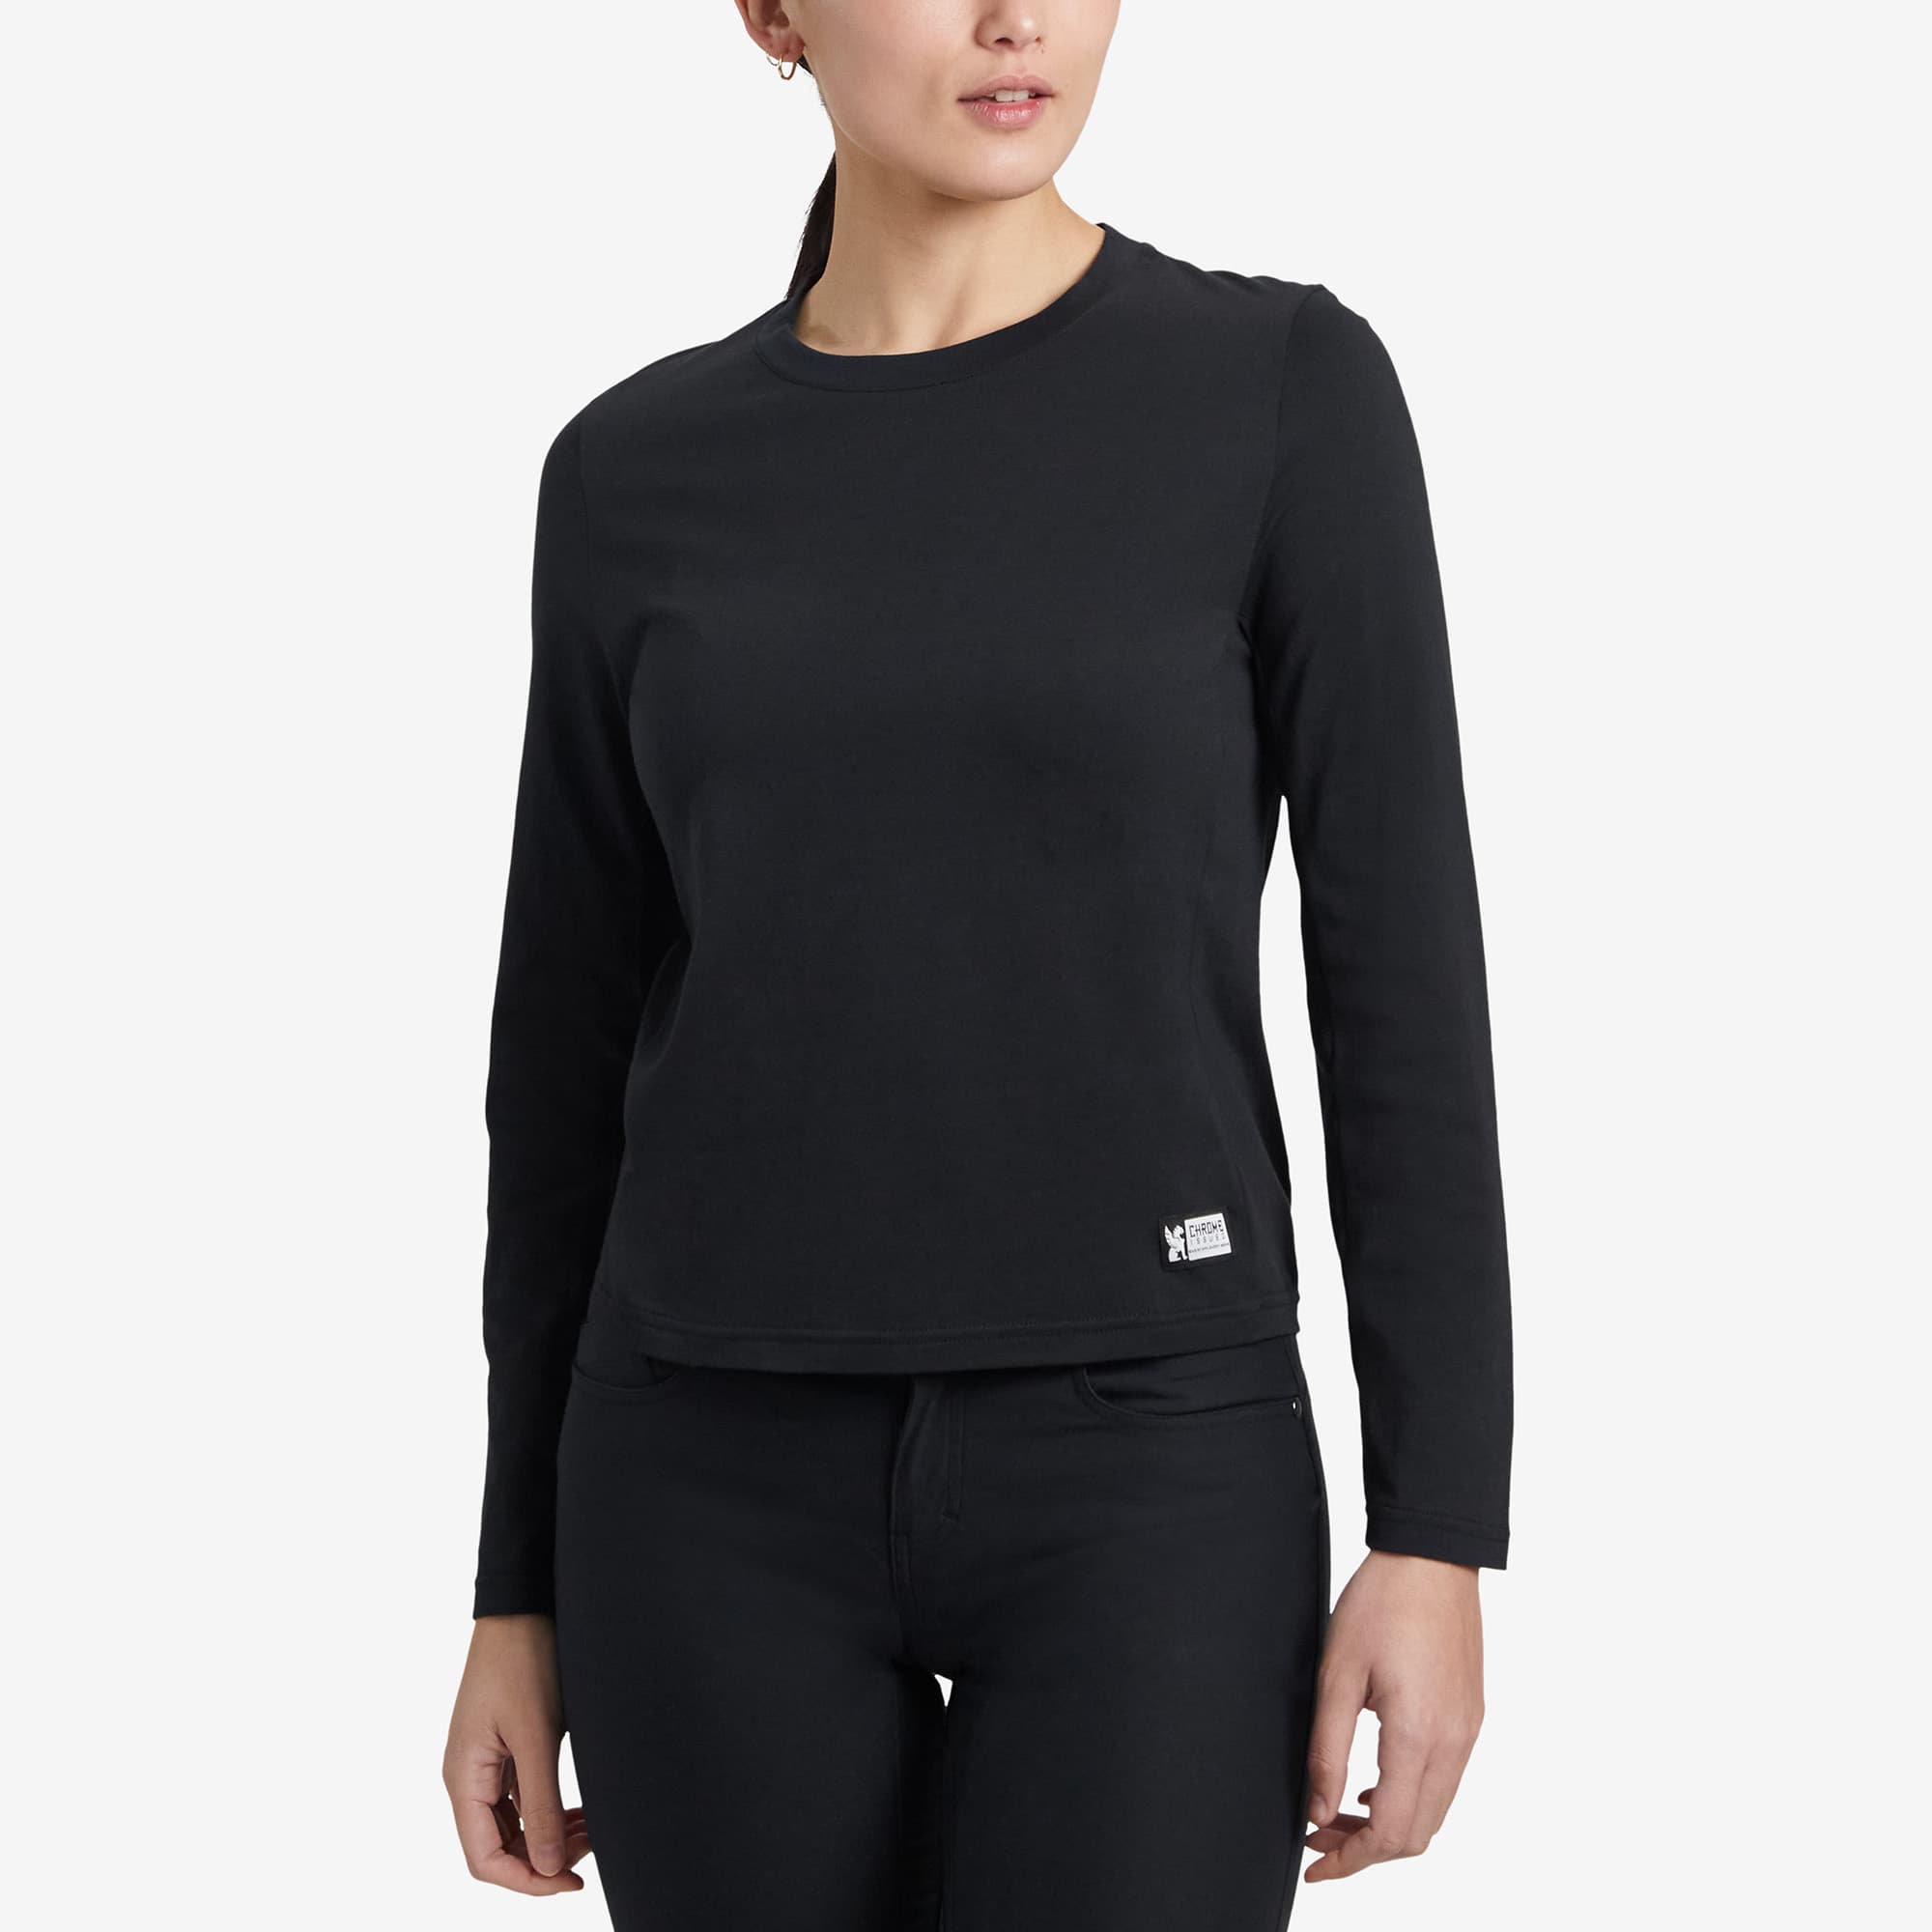 Women's Chrome basics T-Shirt black long sleeve worn by a woman #color_black